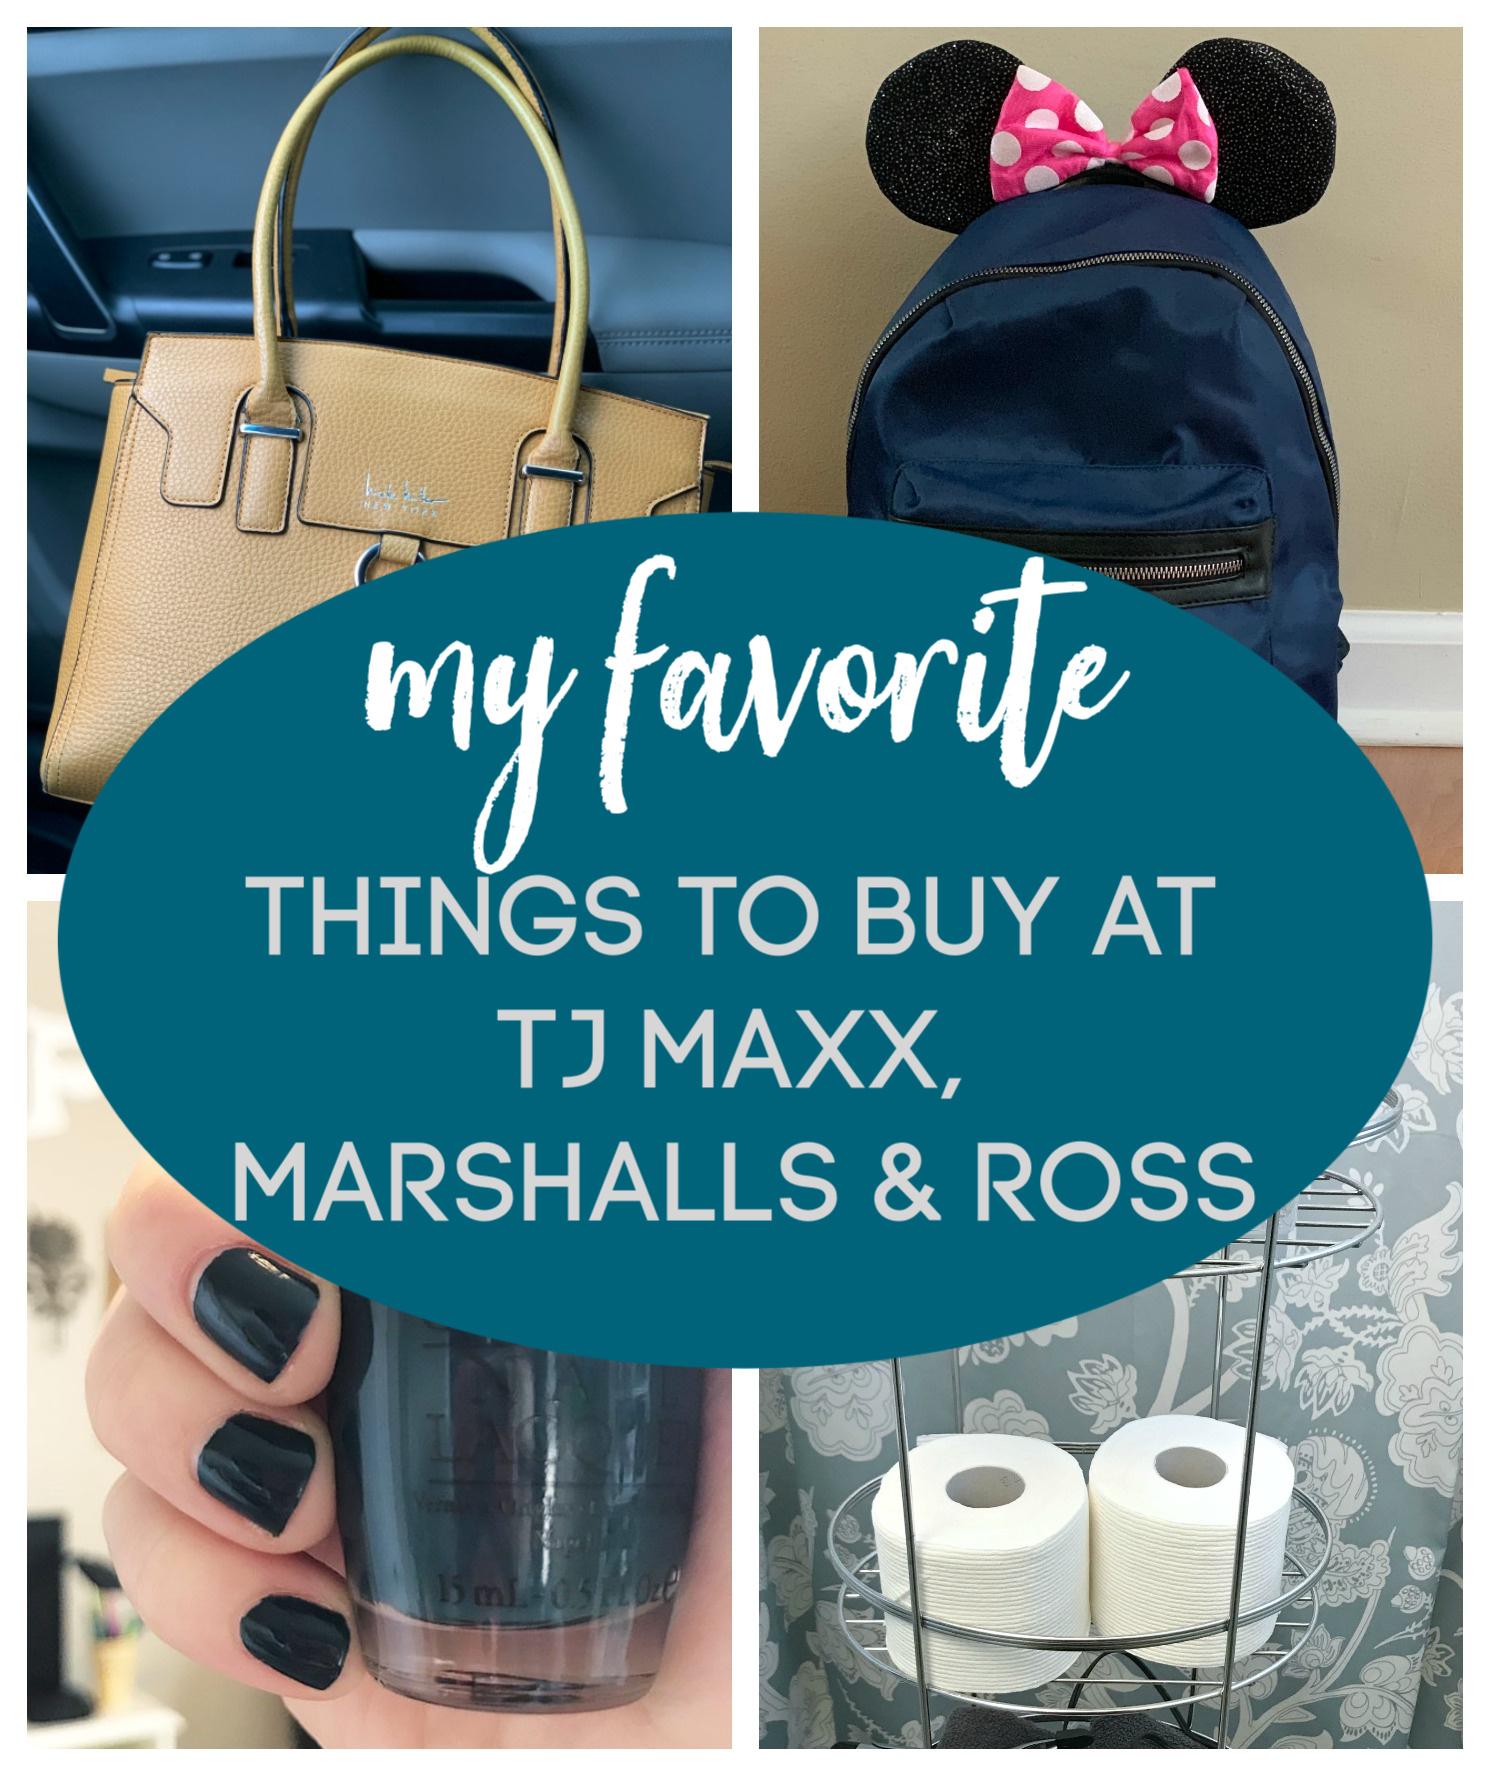 Can I trust bags from TJMaxx/Marshalls? : r/handbags